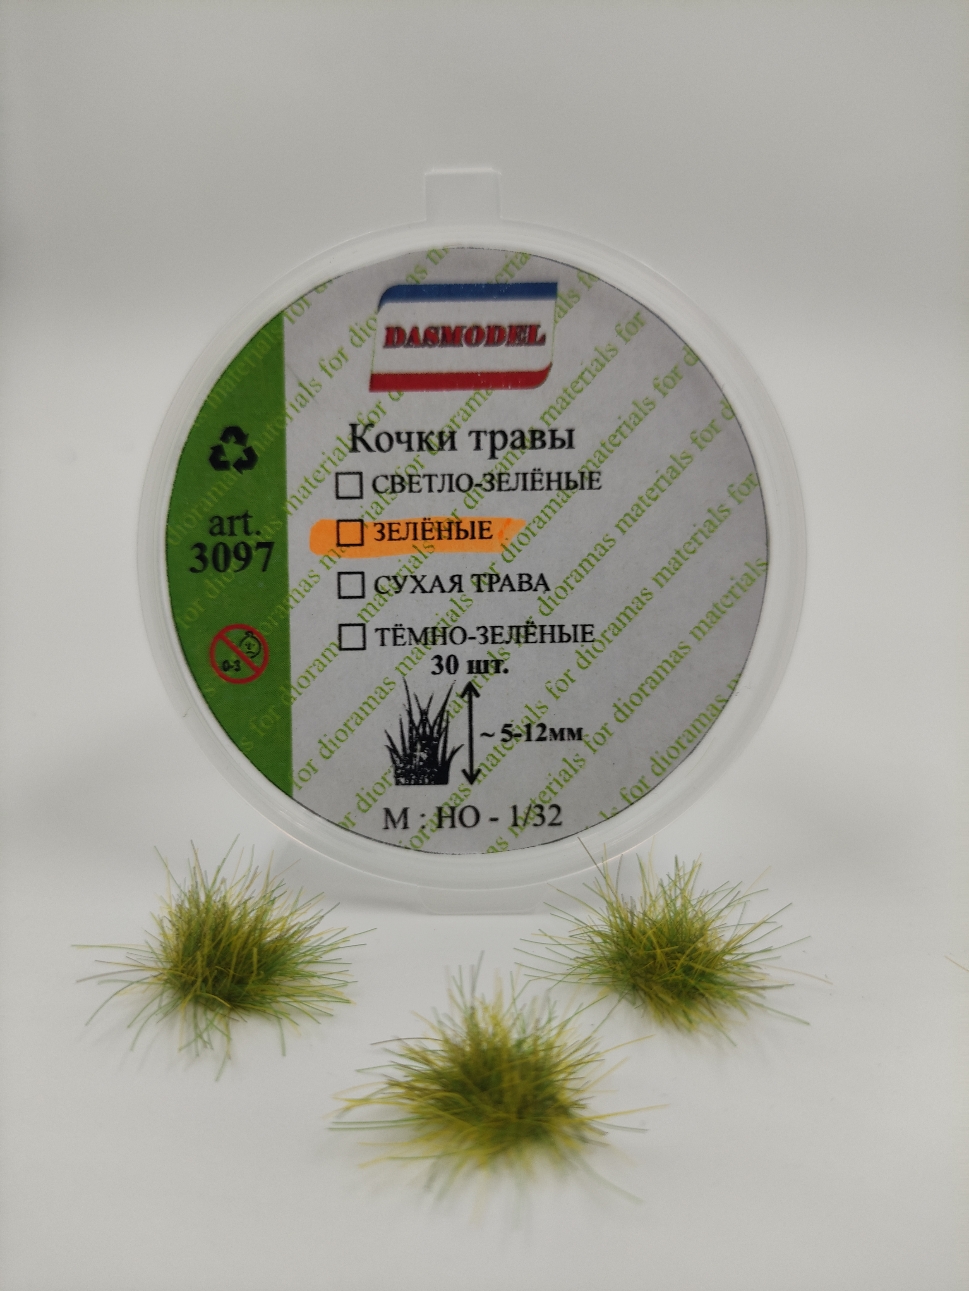 3097  материалы для диорам  Кочки травы зеленые 5-12 мм/30 шт.